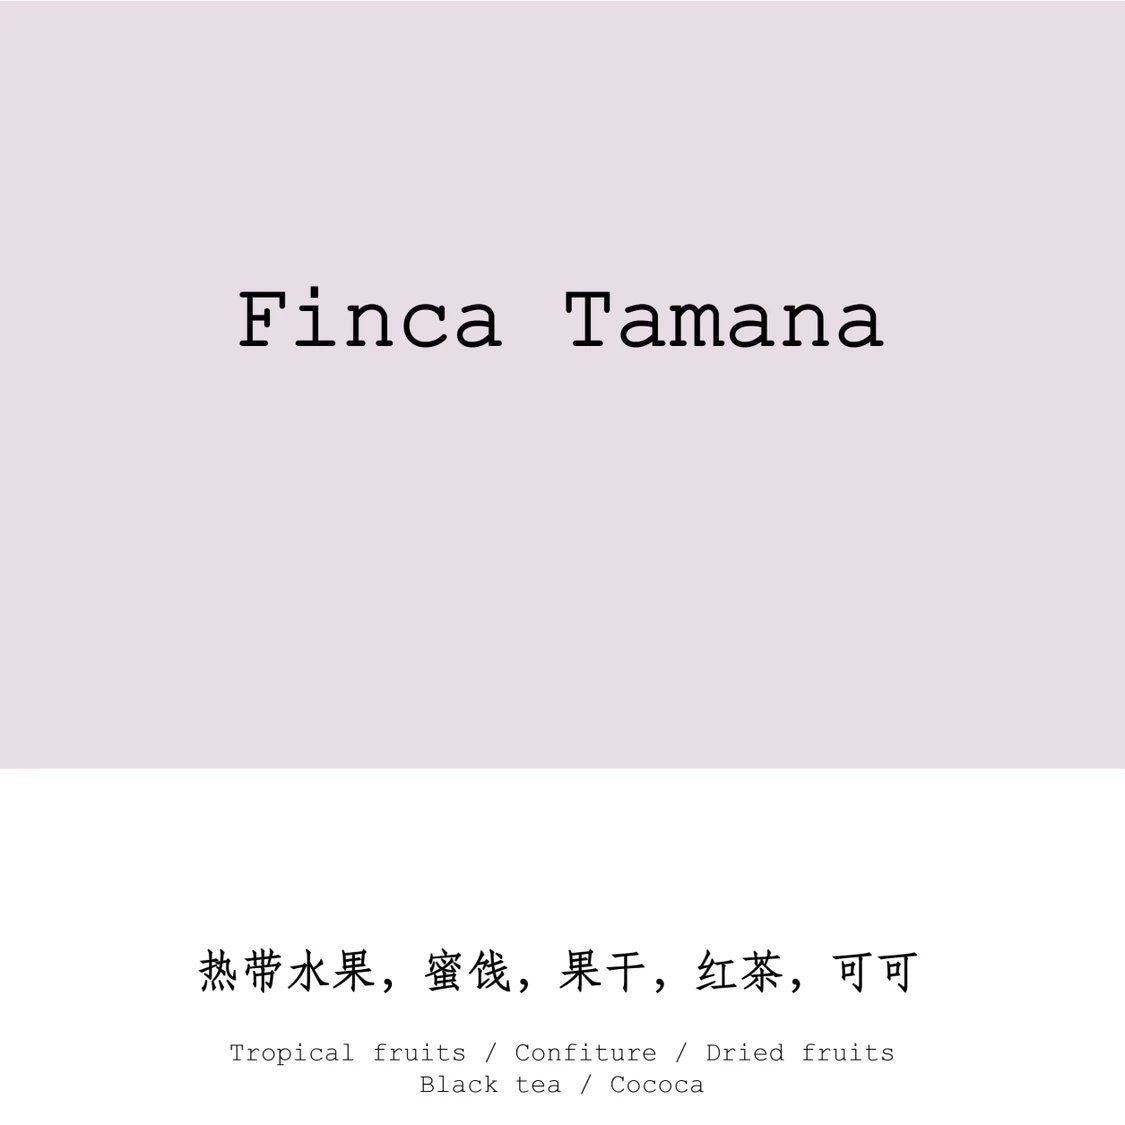 COLOMBIA - FINCA TAMANA